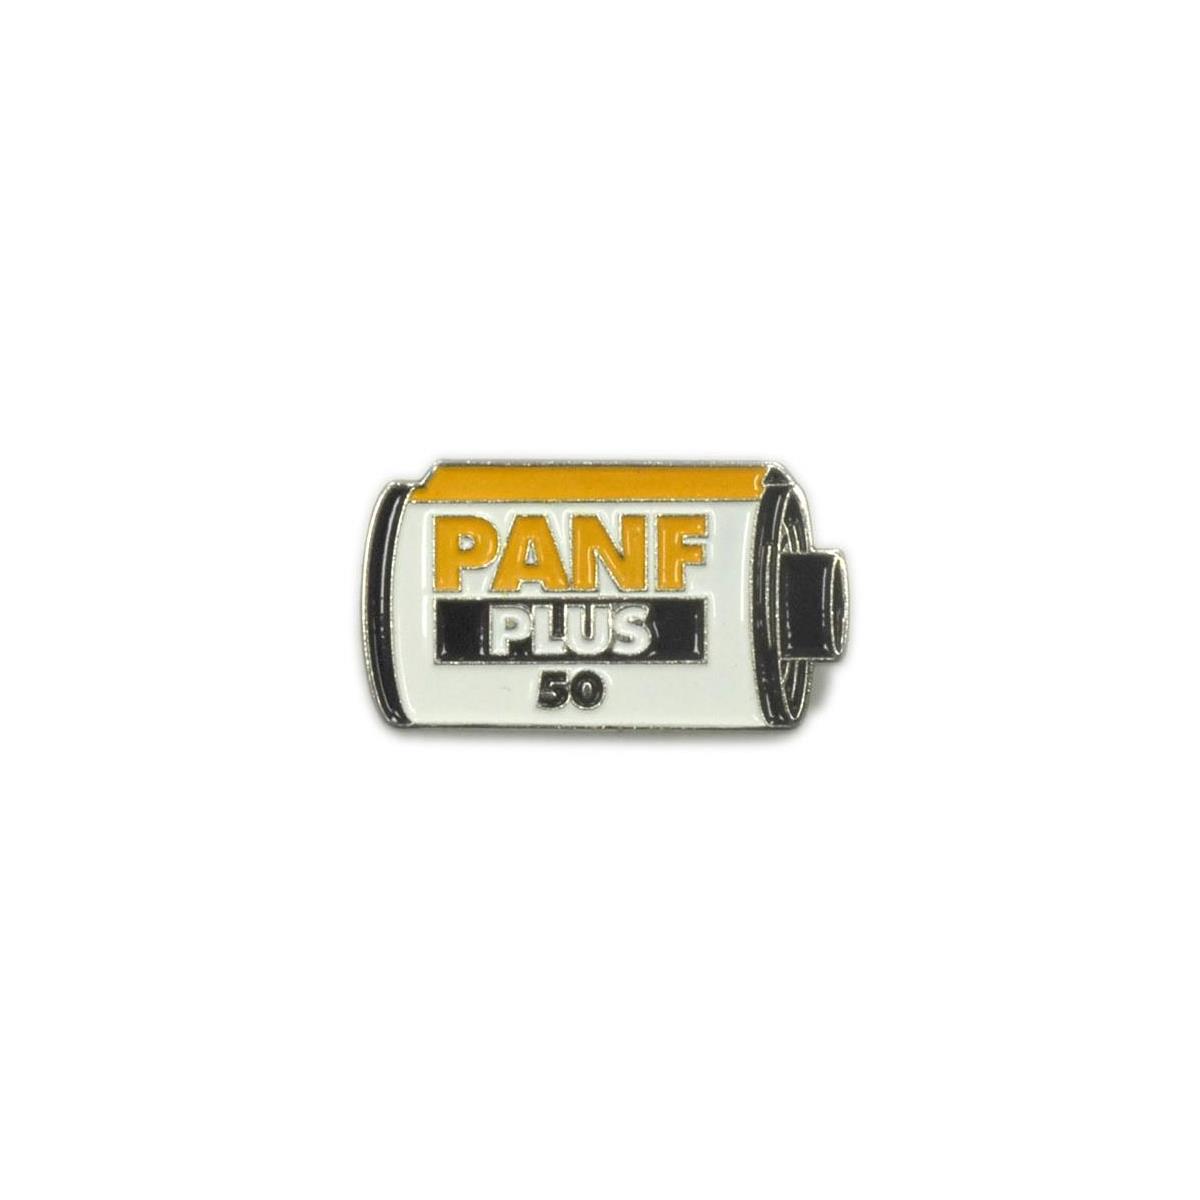 Image of Ilford PANF Plus Metal Pin Badge